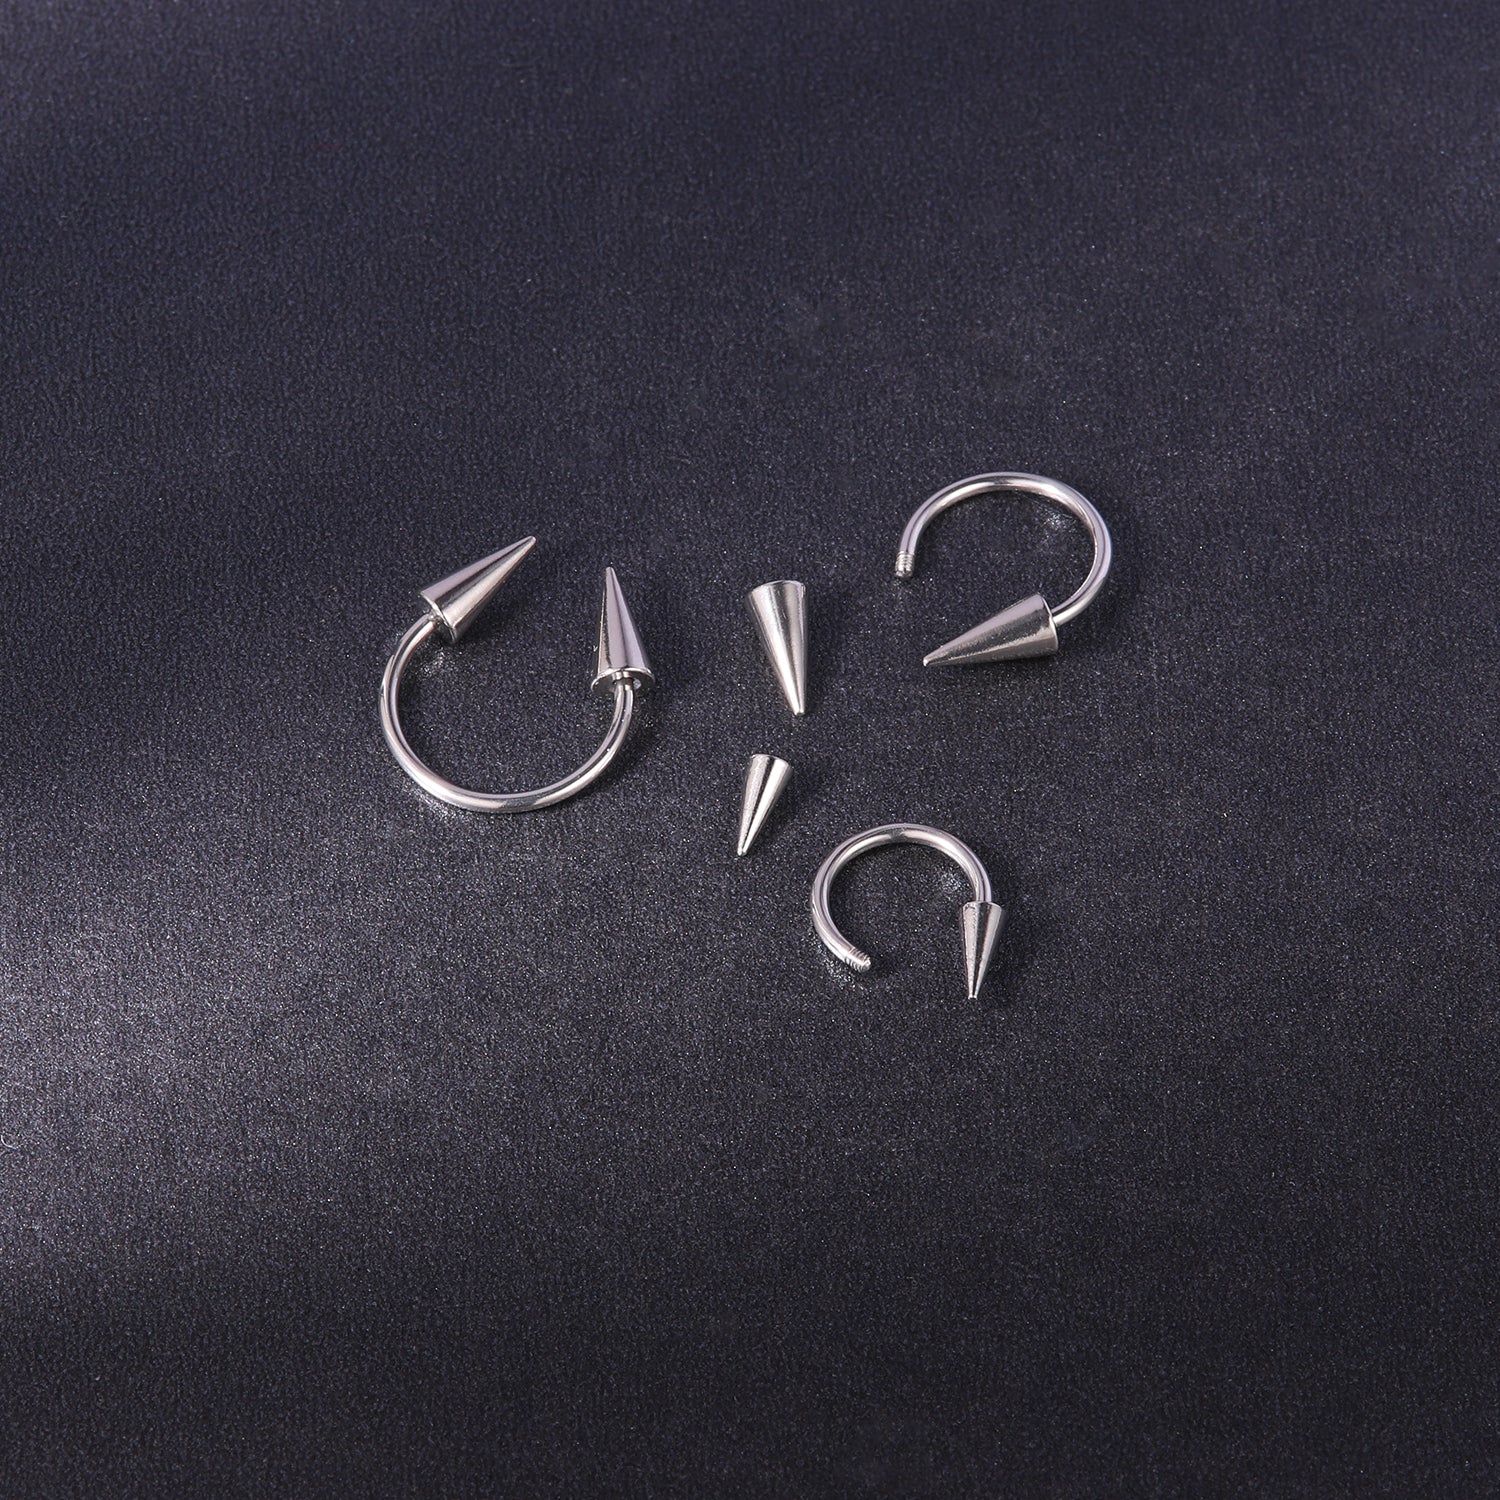 16g-spike-nose-septum-ring-horseshoe-helix-cartilage-piercing